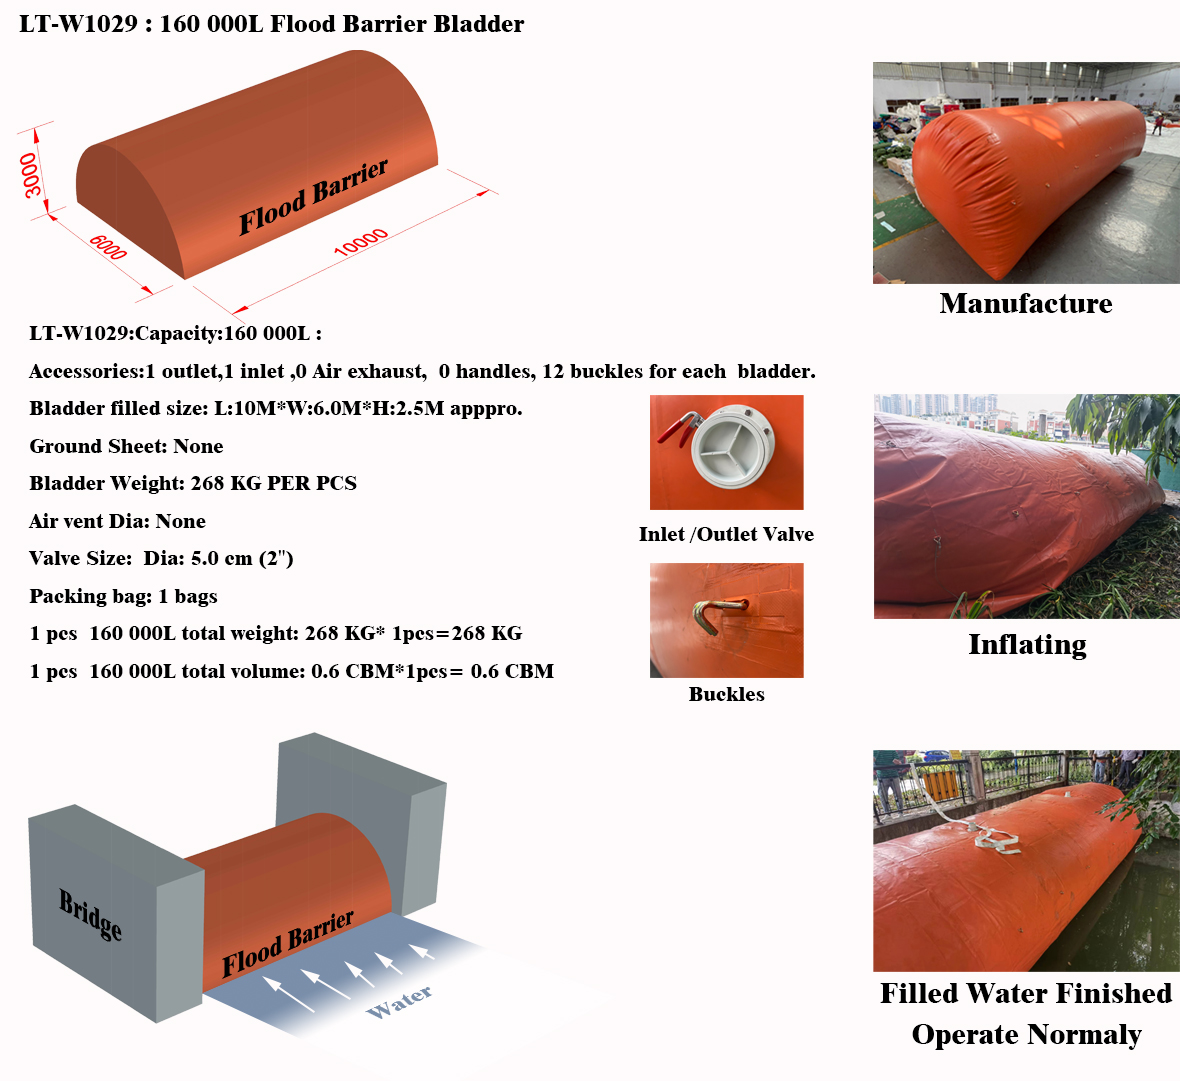 PVC bladder for flood barrier defense river when heavy flood come